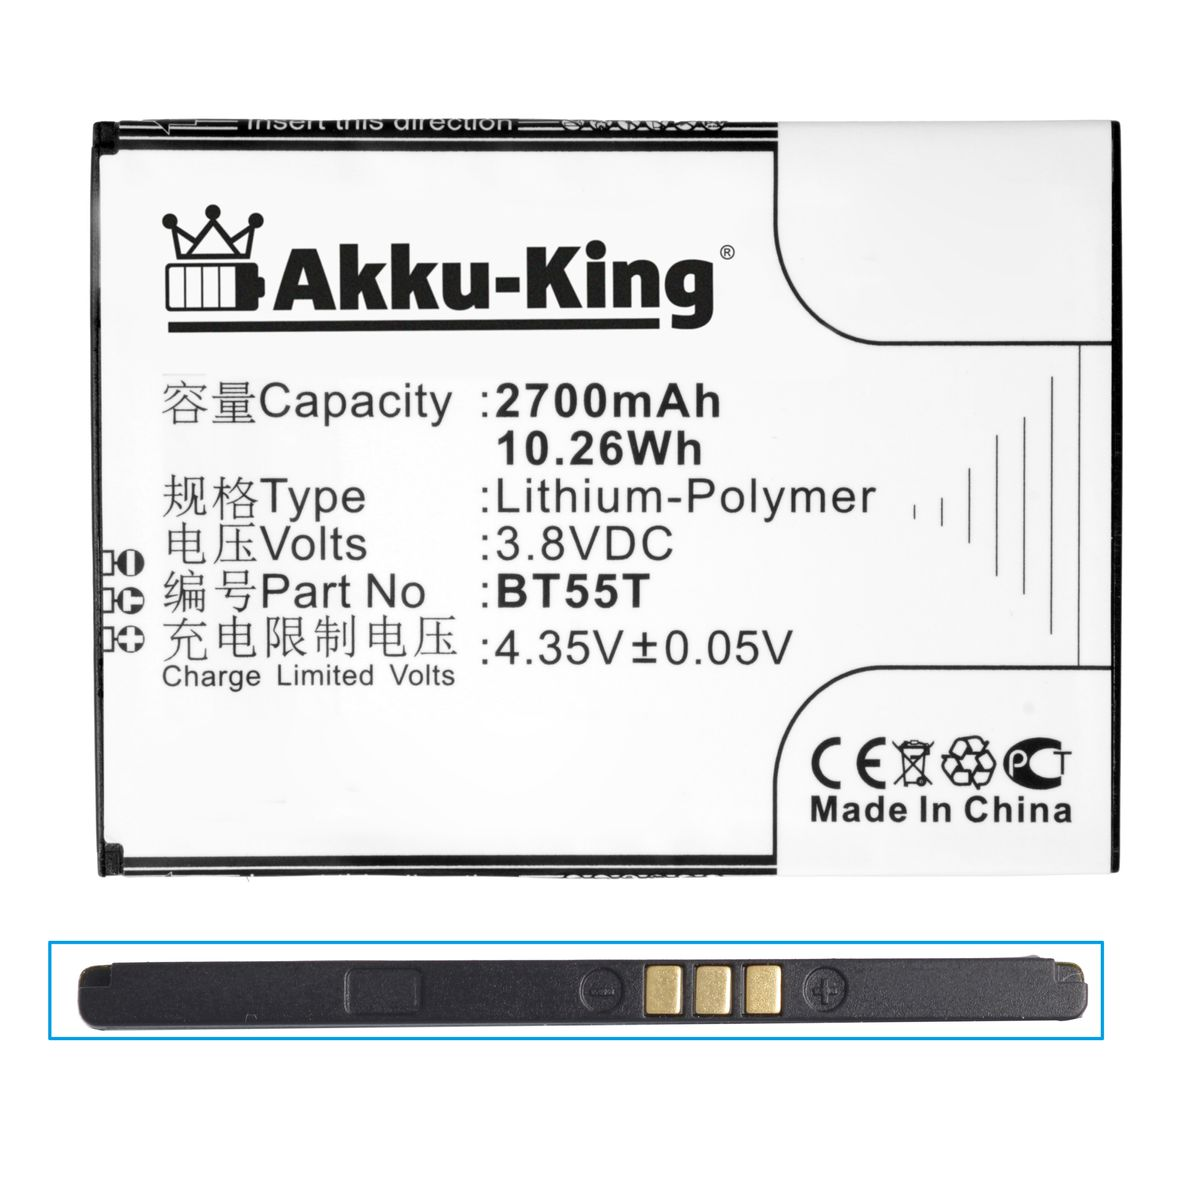 mit AKKU-KING Handy-Akku, Akku 3.8 Zopo Volt, 2700mAh kompatibel Li-Polymer BT55T